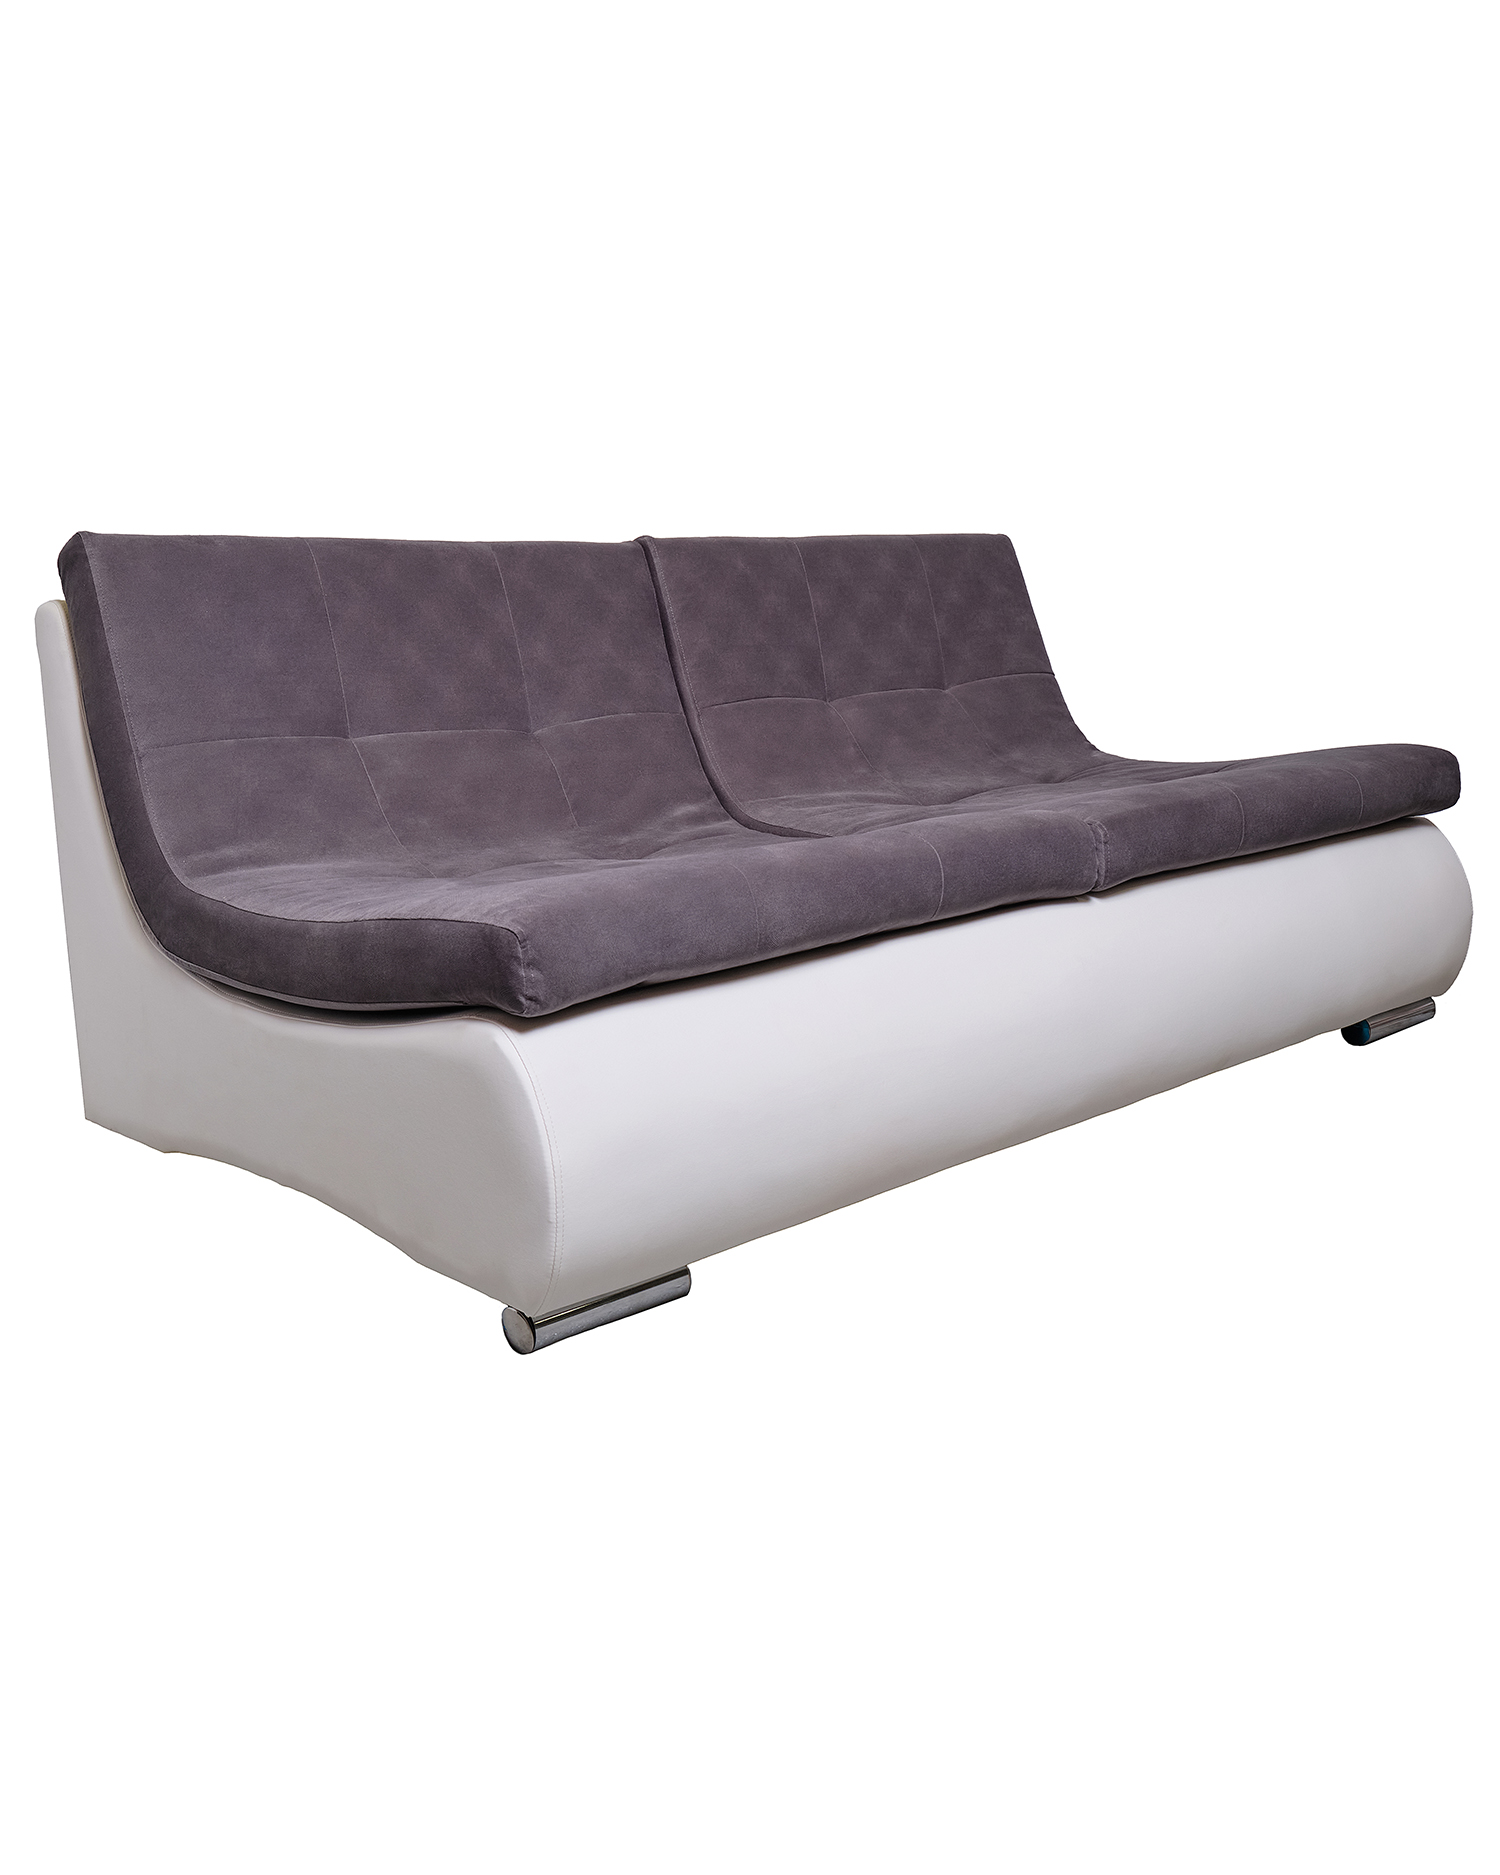 Demo product furniture sofa brown/white